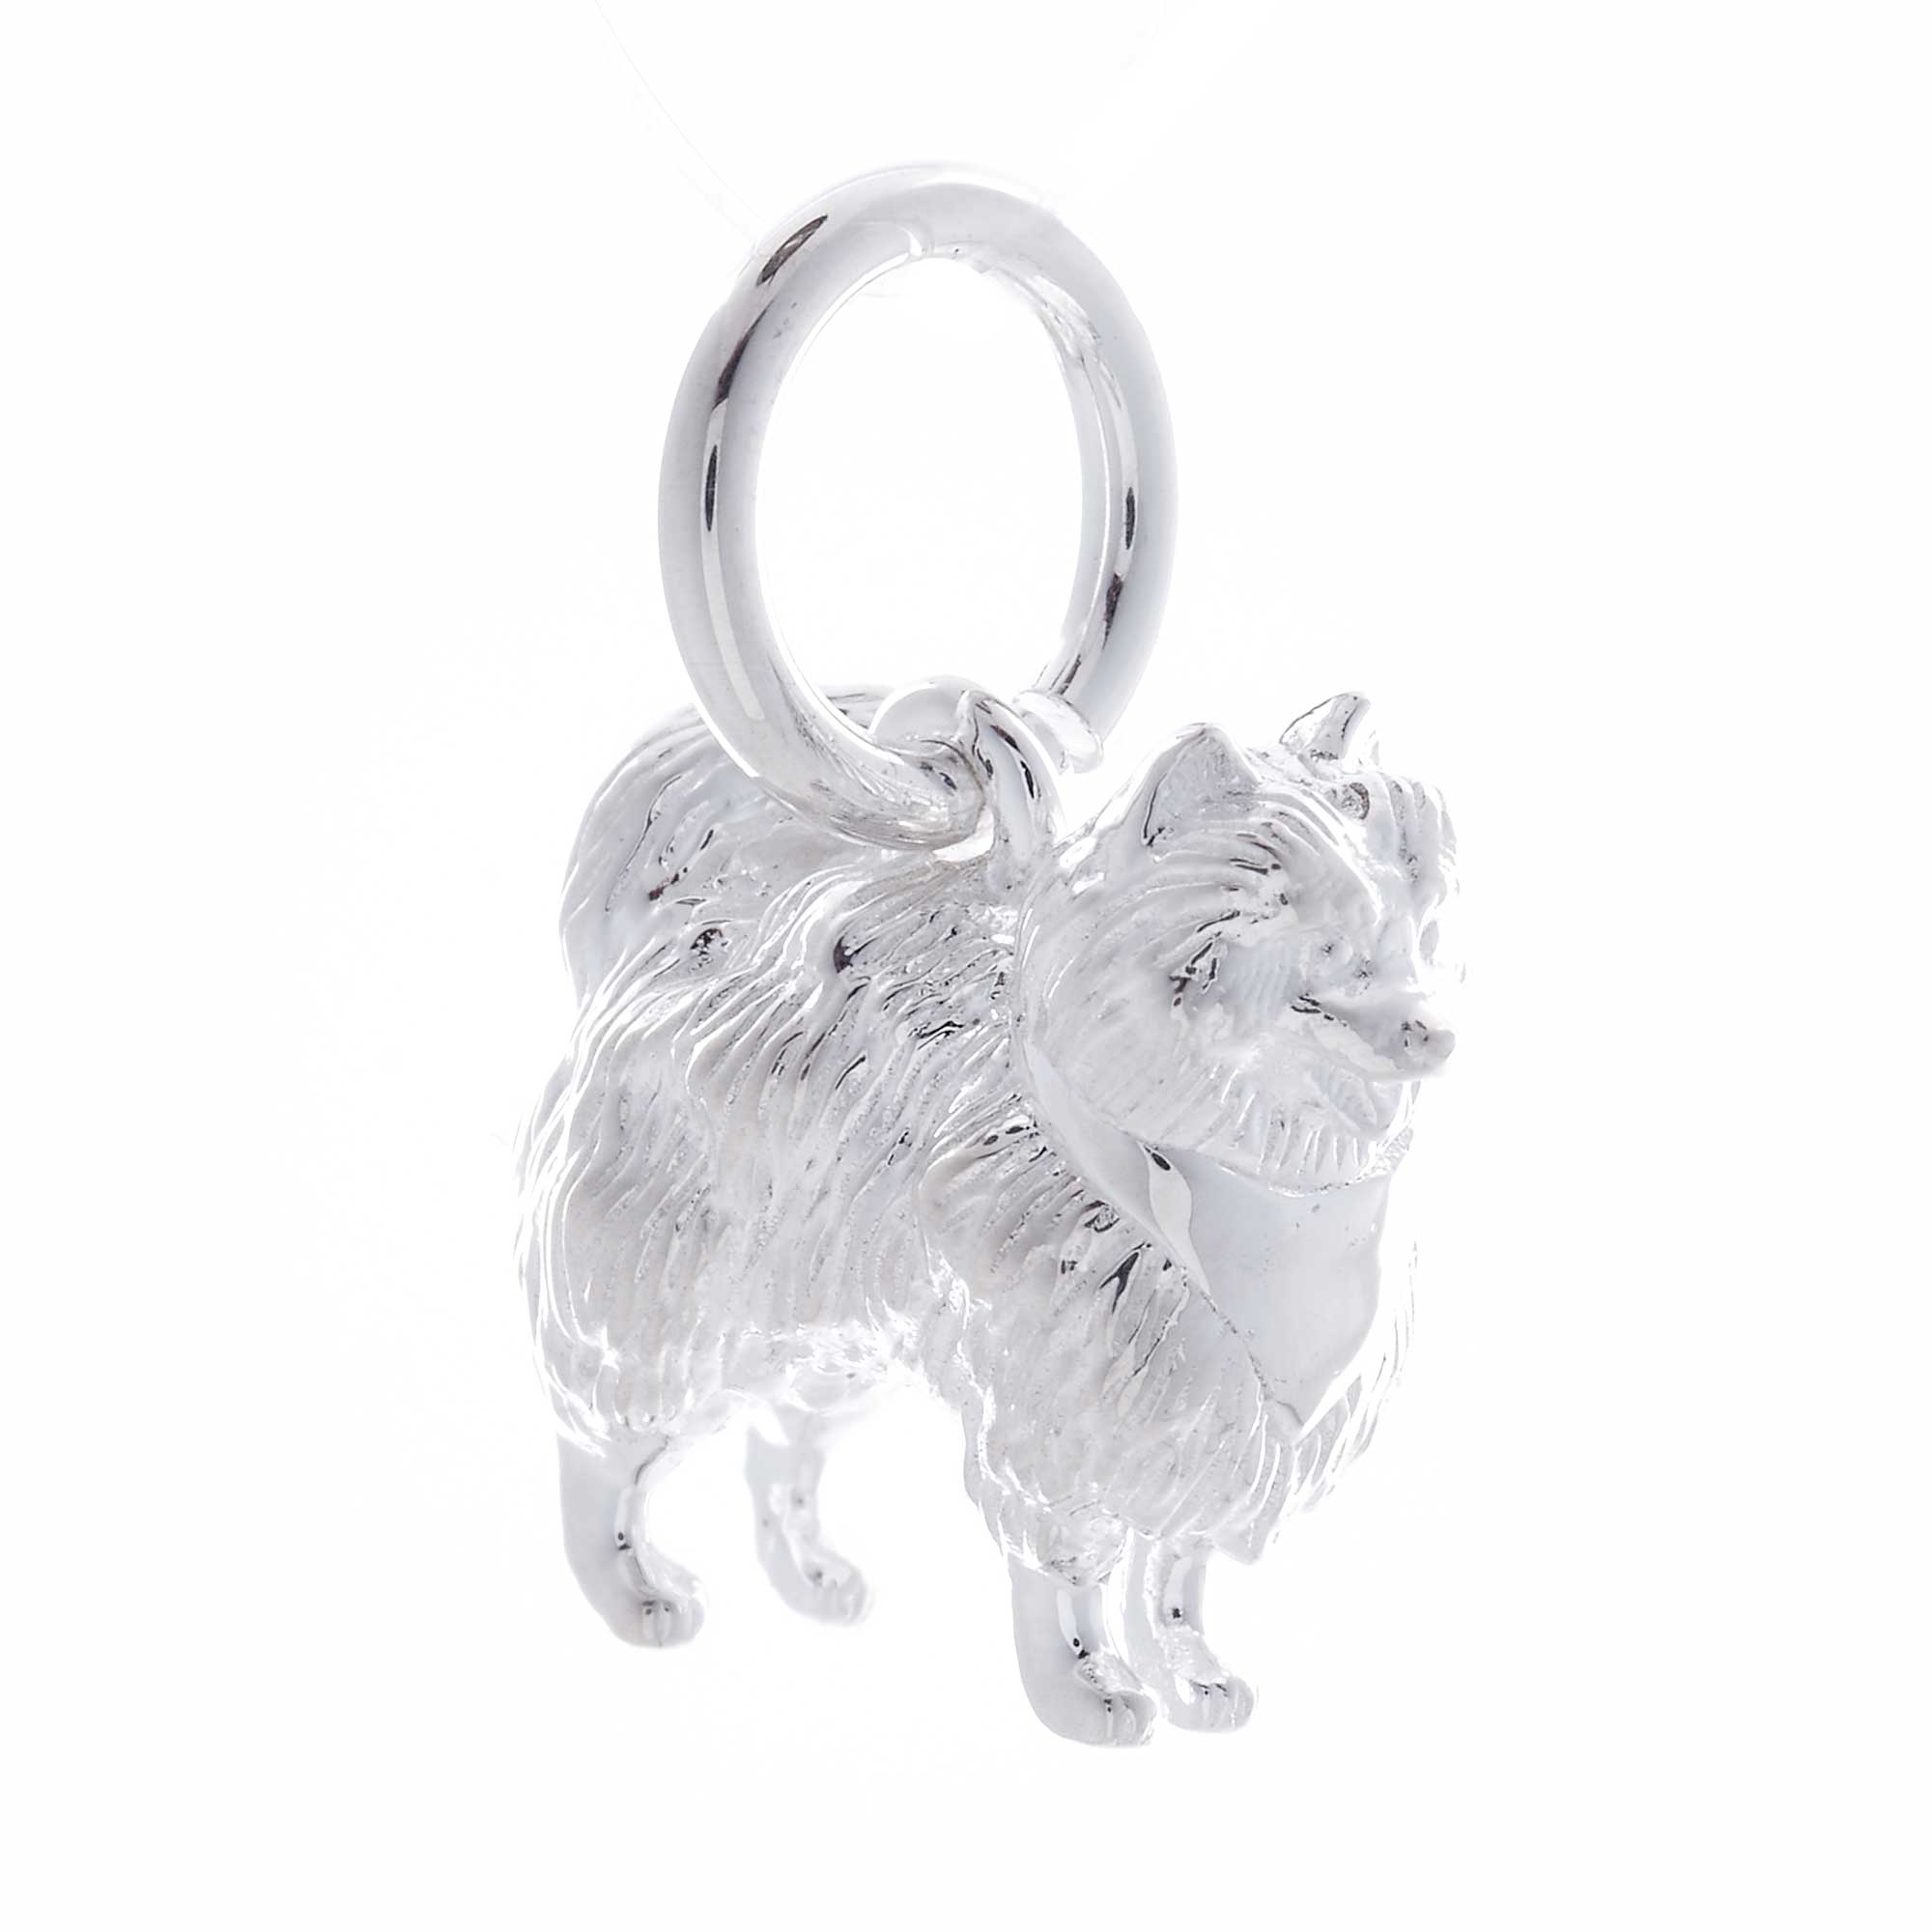 silver pomeranian dog charm scarlett jewellery gift for pet loss new pet dog walker breeder